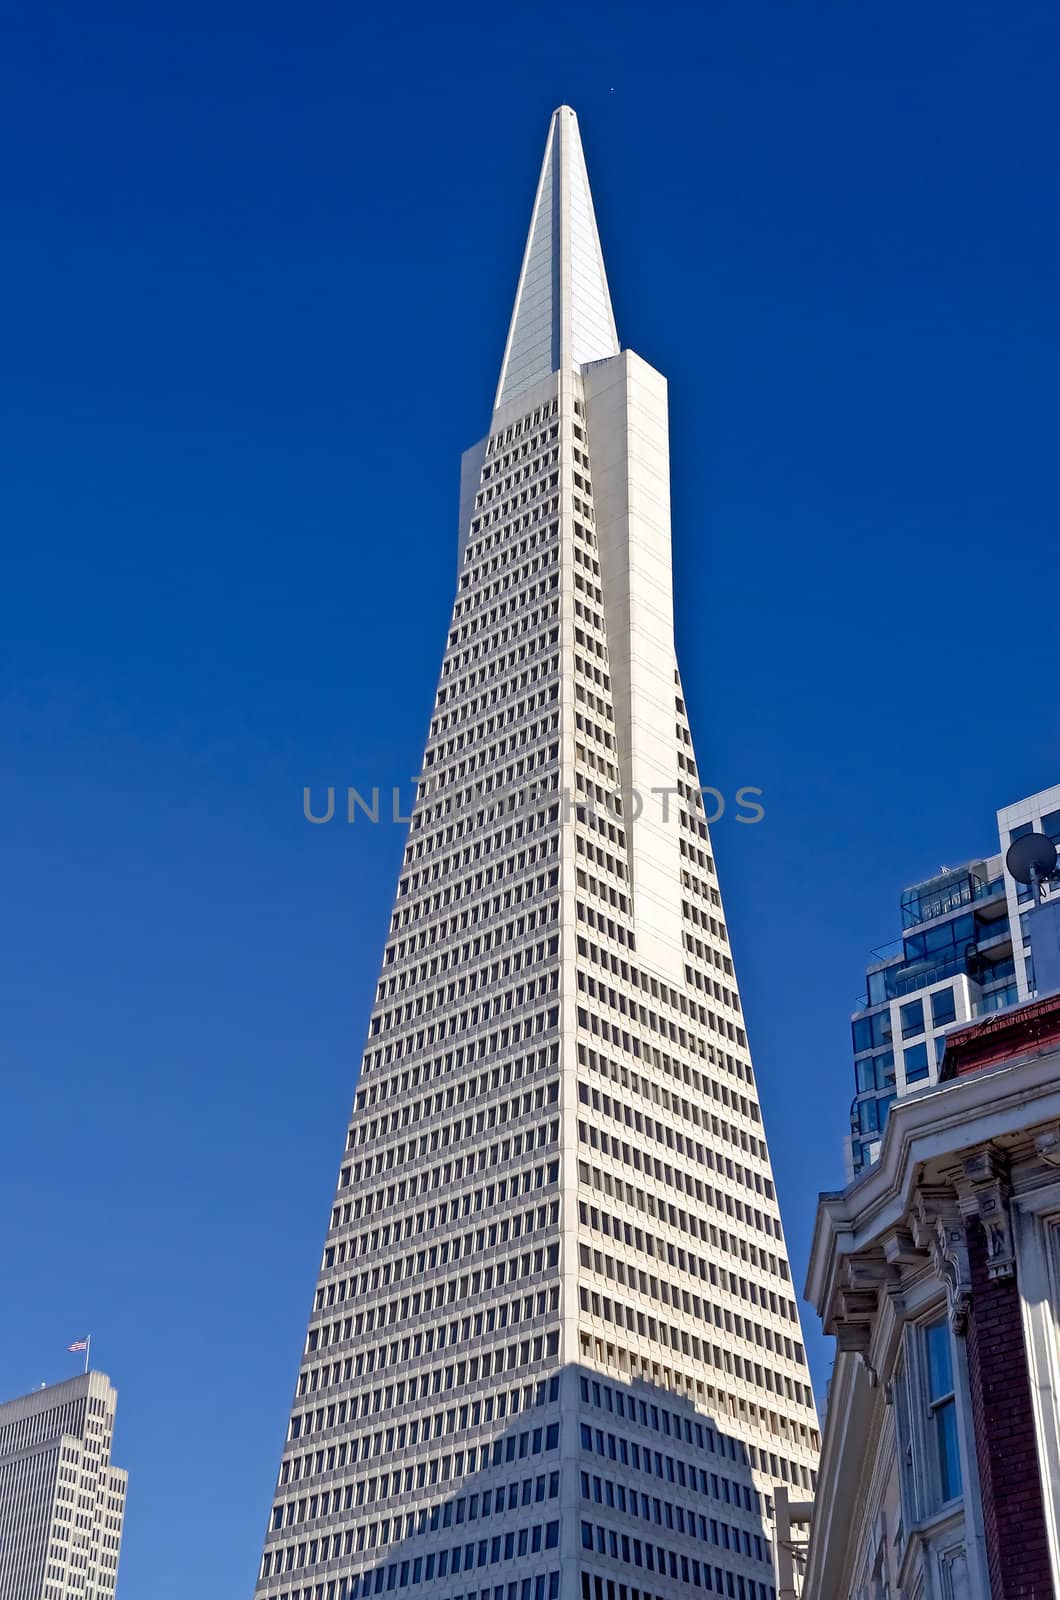 The most famous Skyscraper landmark in San Francisco, Transamerica Pyramid, August 2012